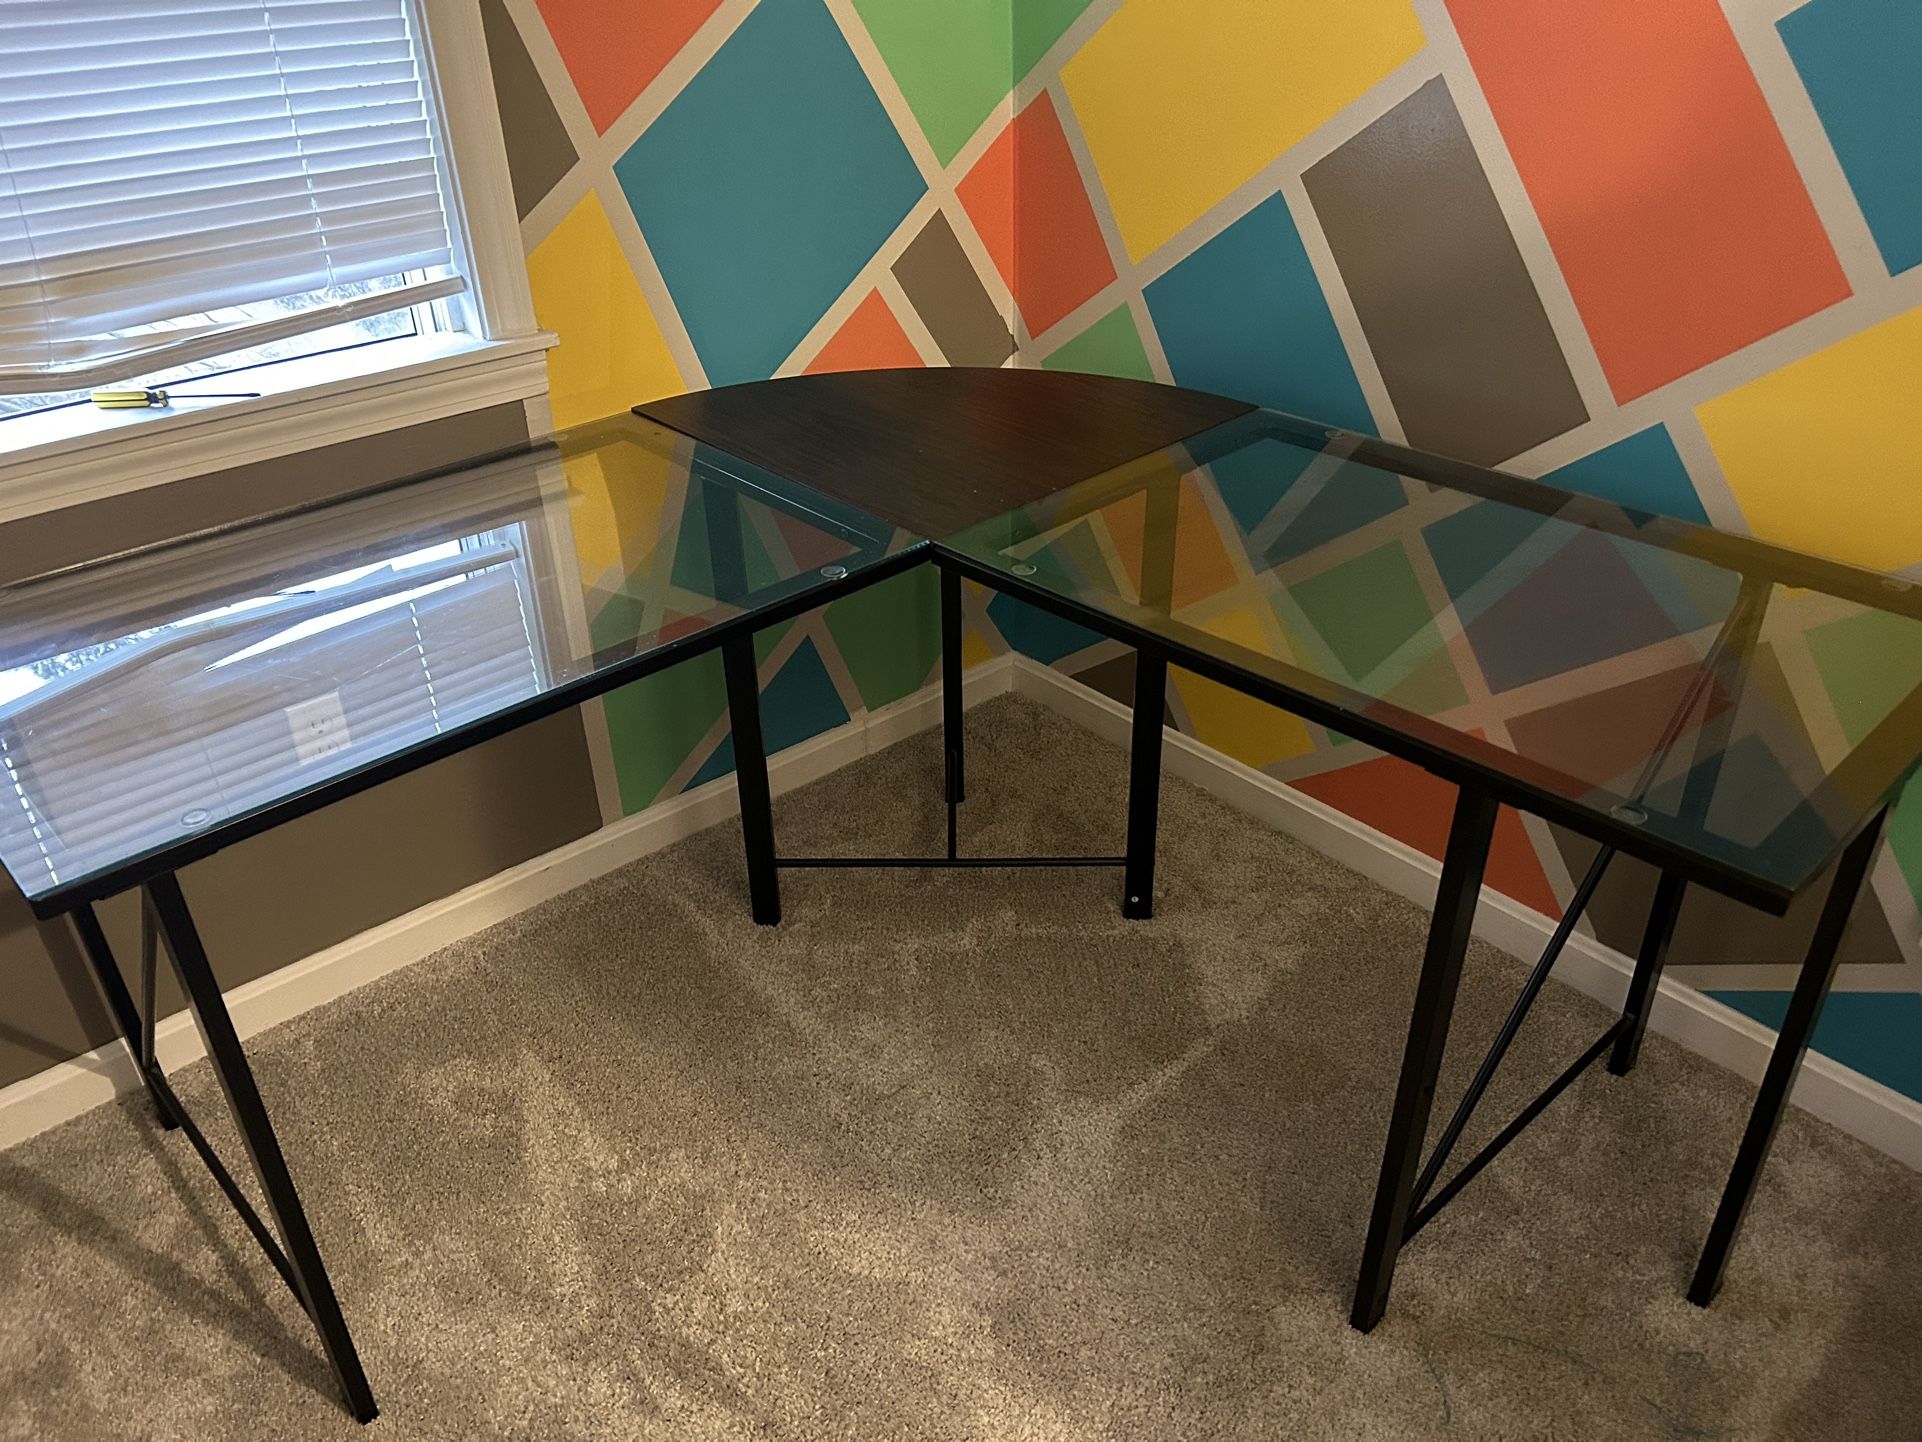 Glass Desk Like New